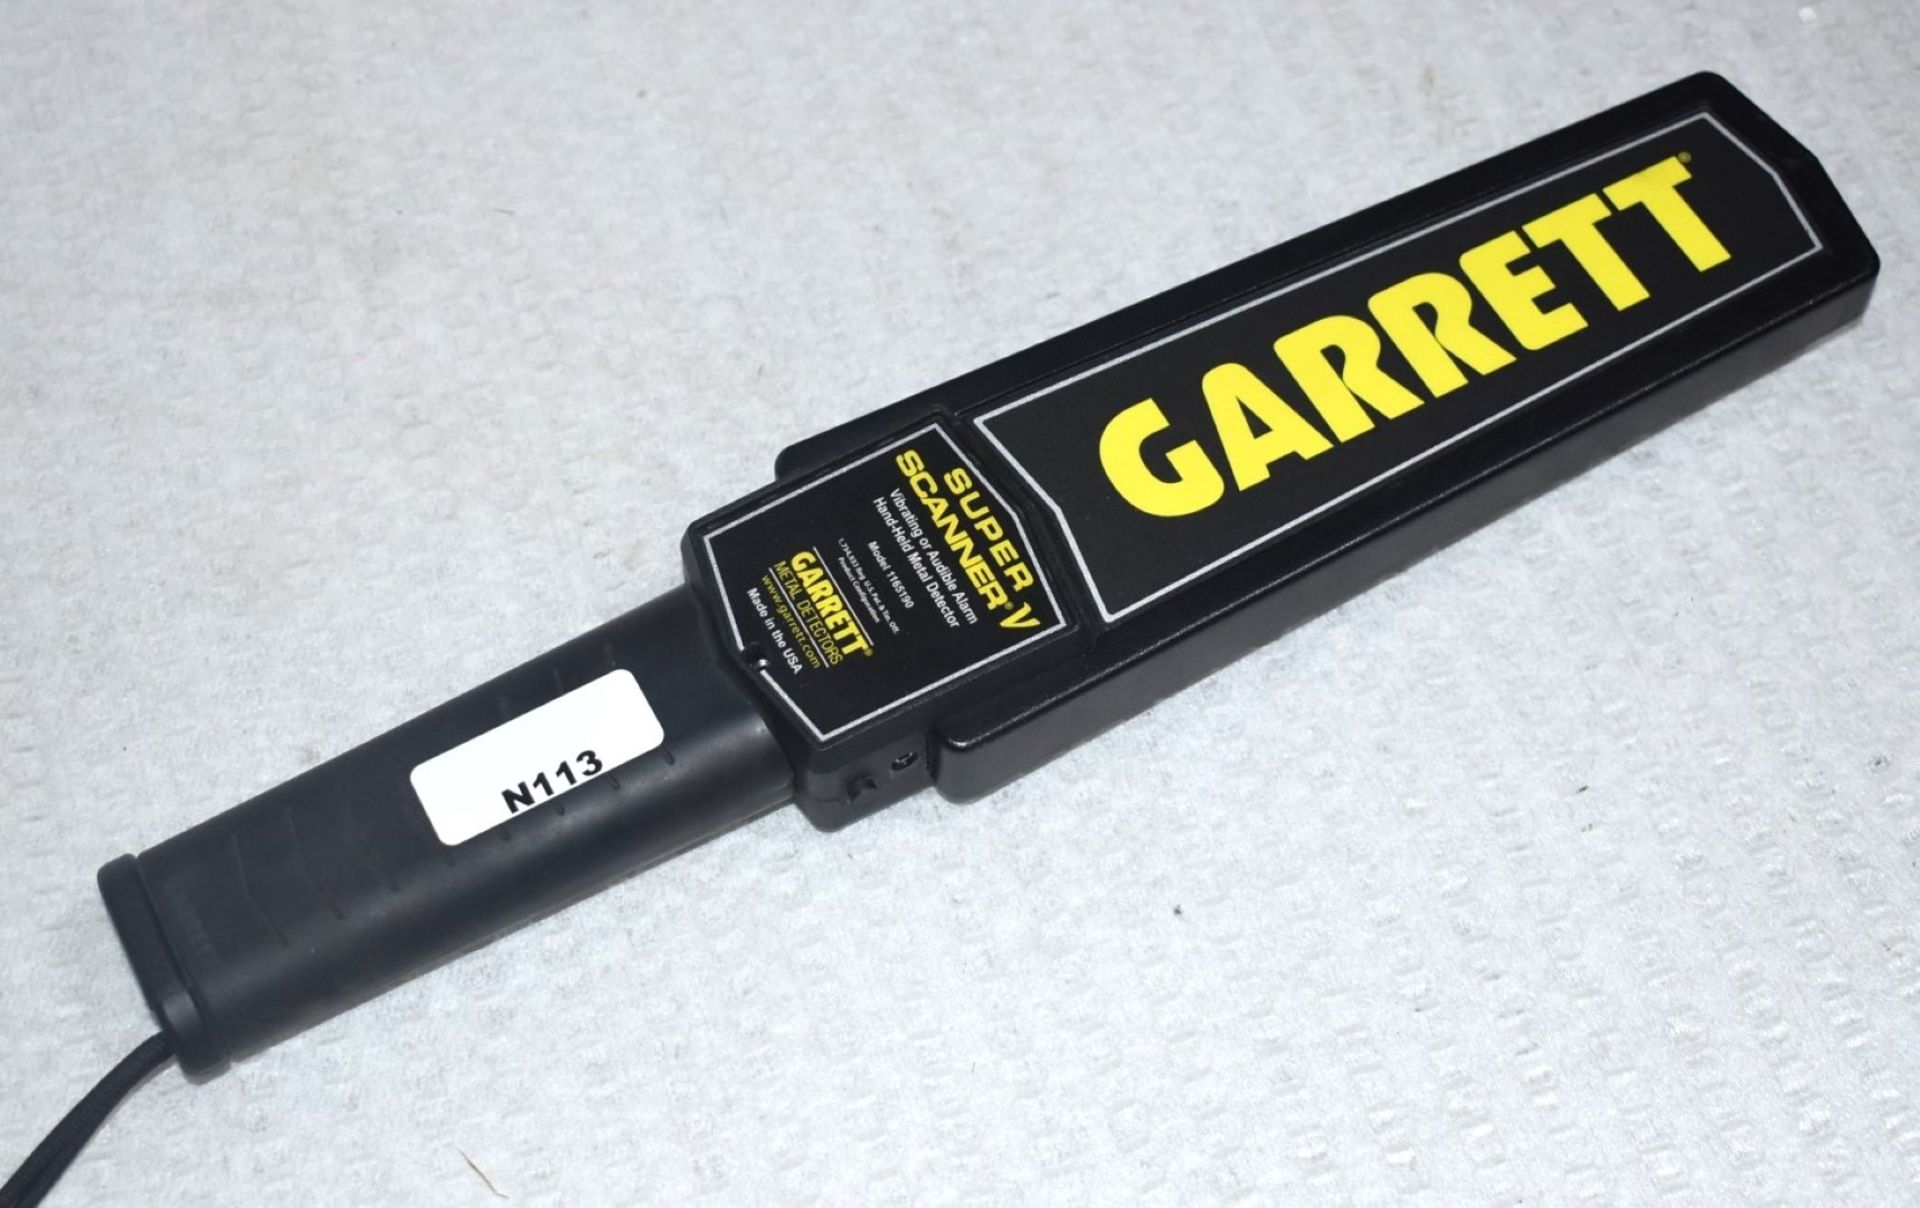 1 x Garrett Super Scanner V Vibrating Audible Hand Held Metal Detector